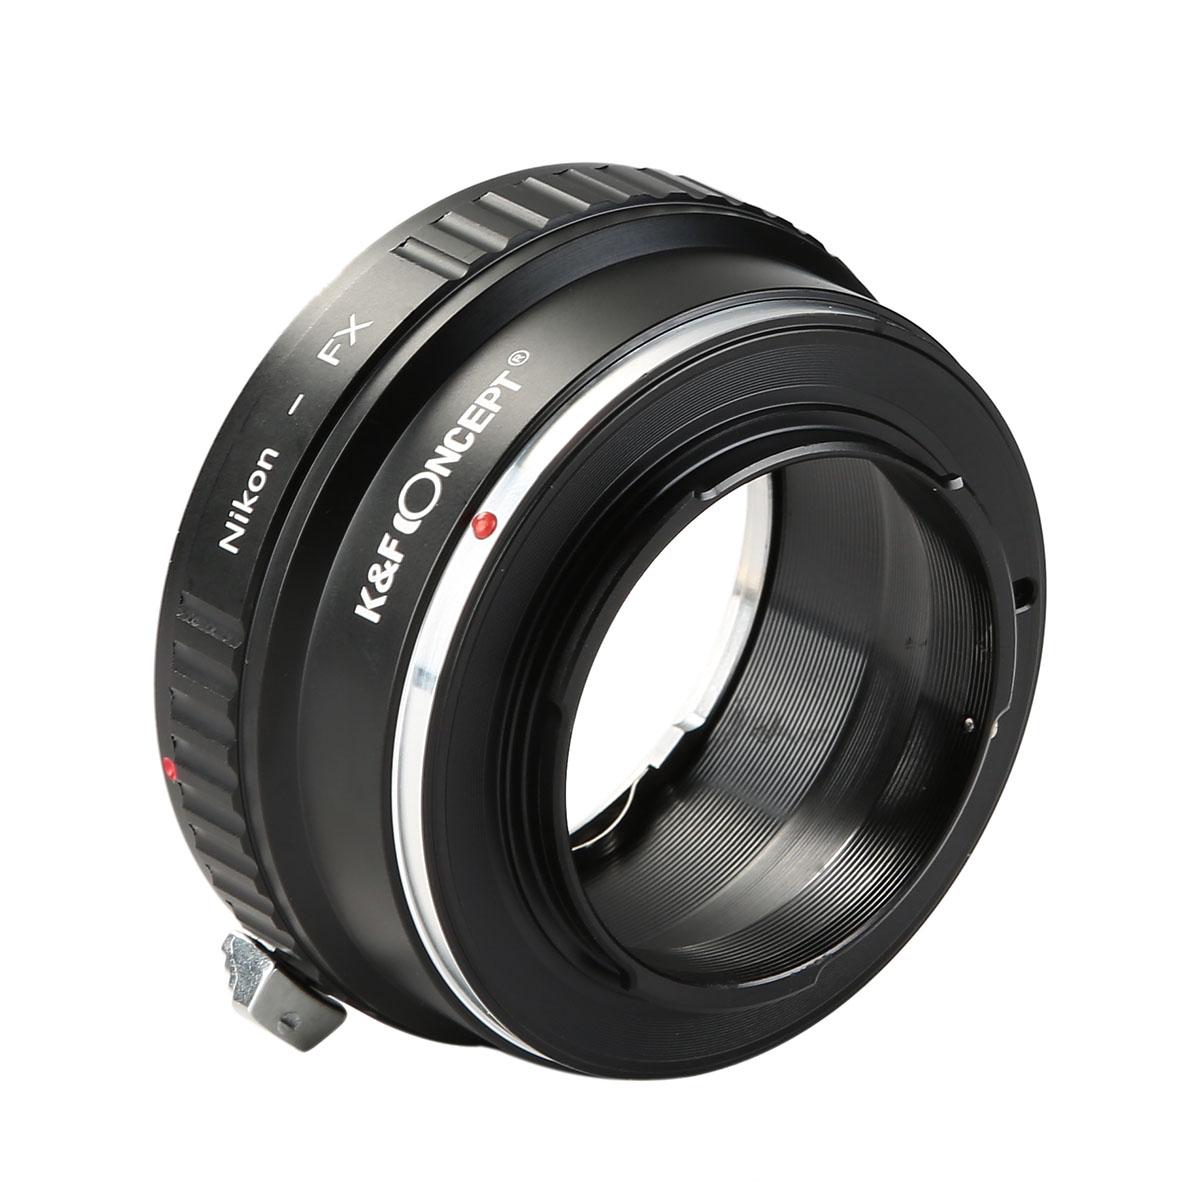 K&F Concept Lens Adapter KF06.101 for NiKon-Fuji X-Mount 